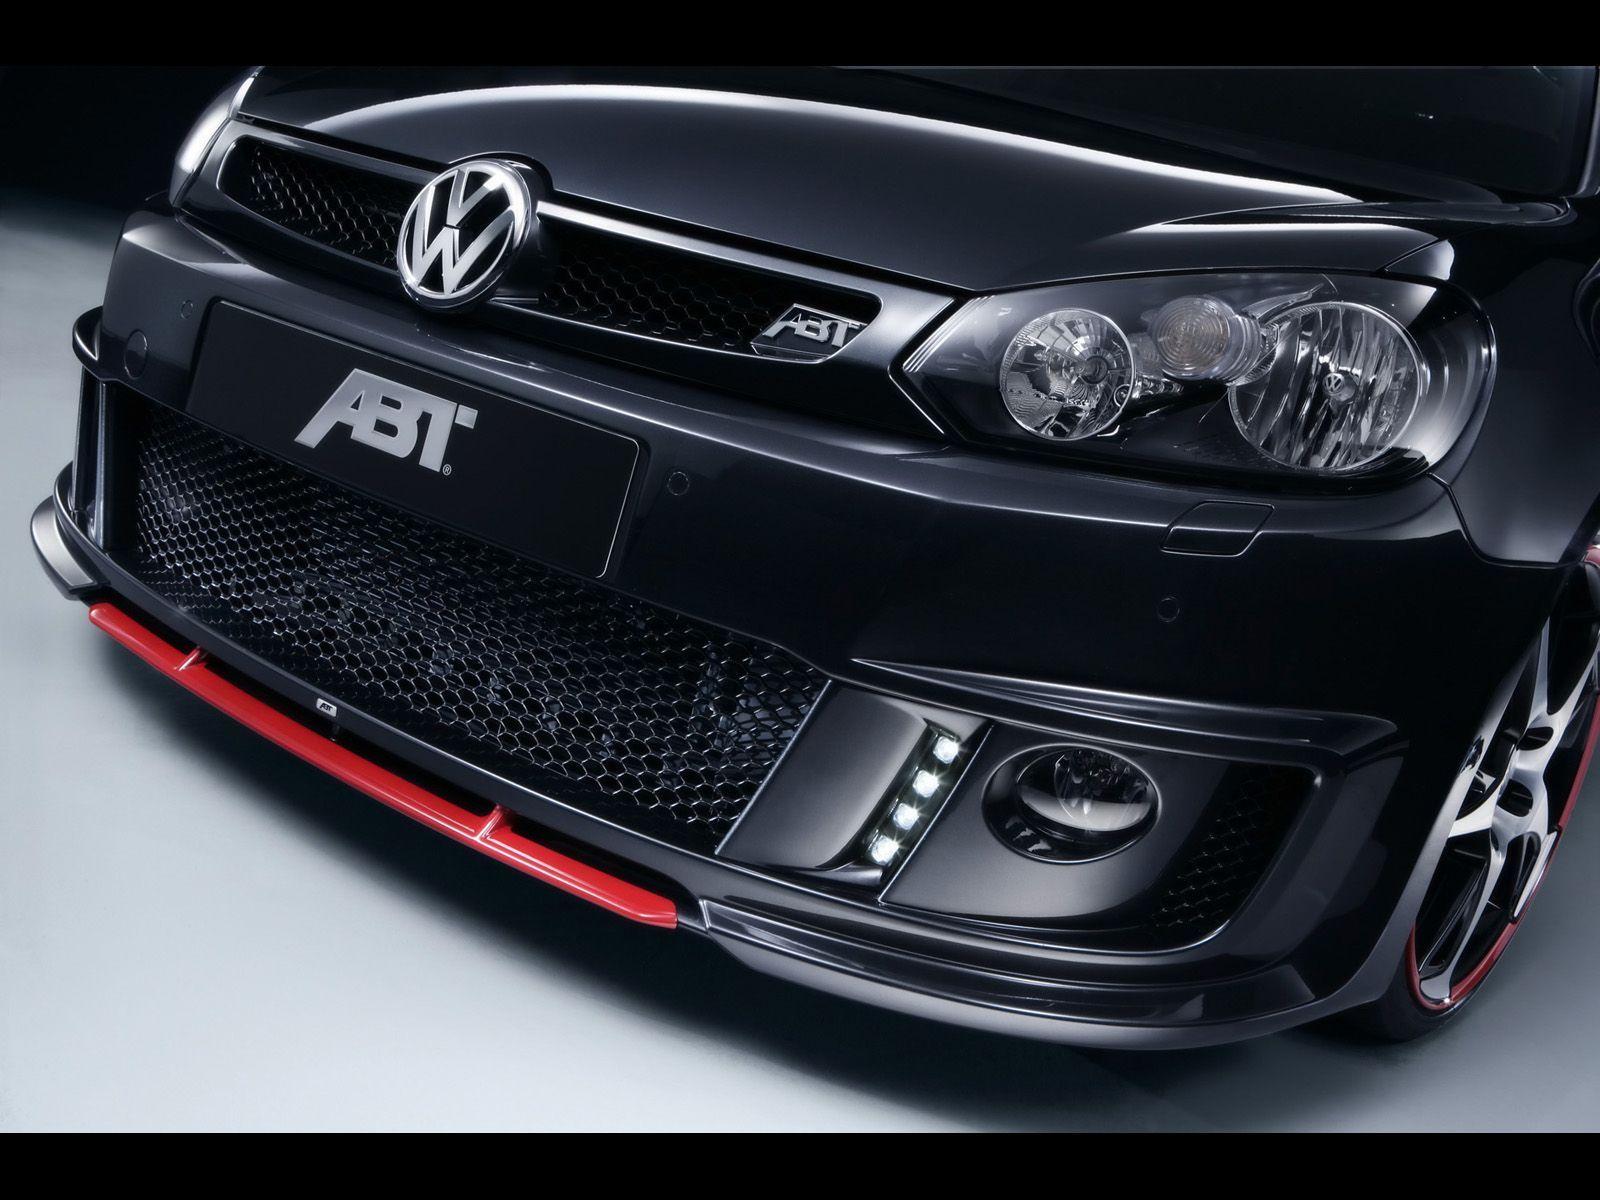 Black ABT Golf GTI Light Front View desk 4K wallpapers